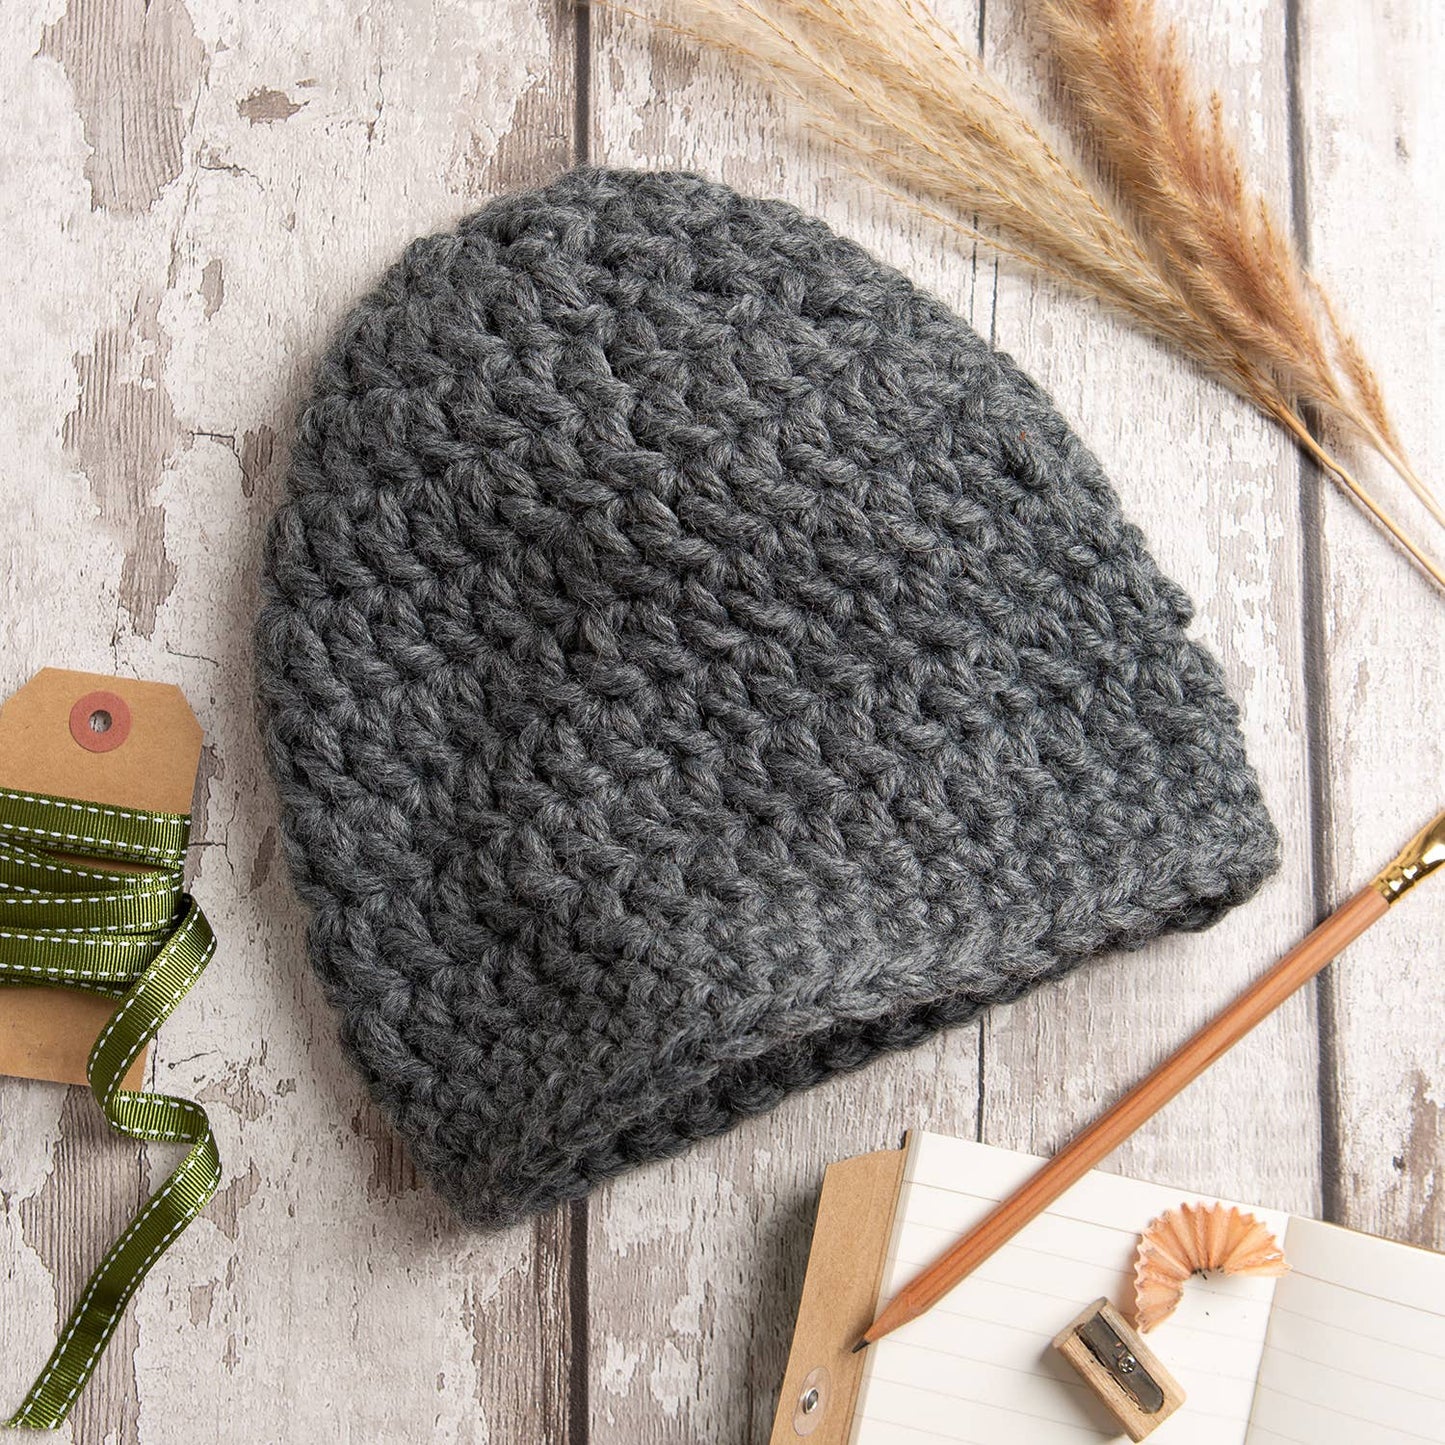 Wool Couture Company - Hat Crochet Kit - Beginner Basics